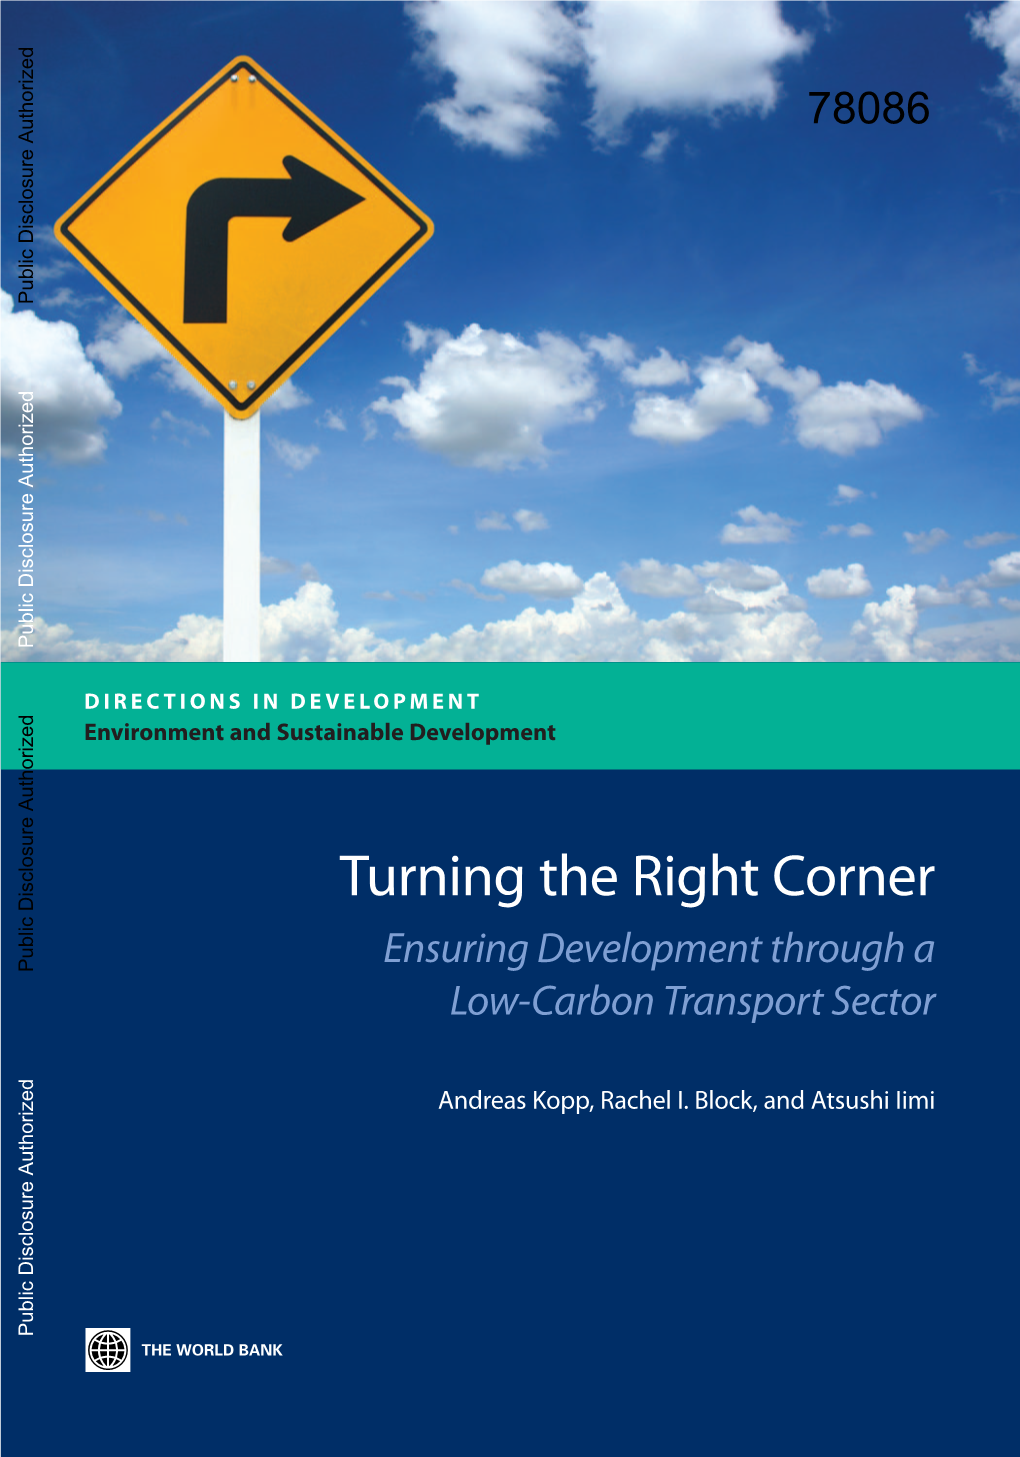 Ensuring Development Through a Low-Carbon Transport Sector